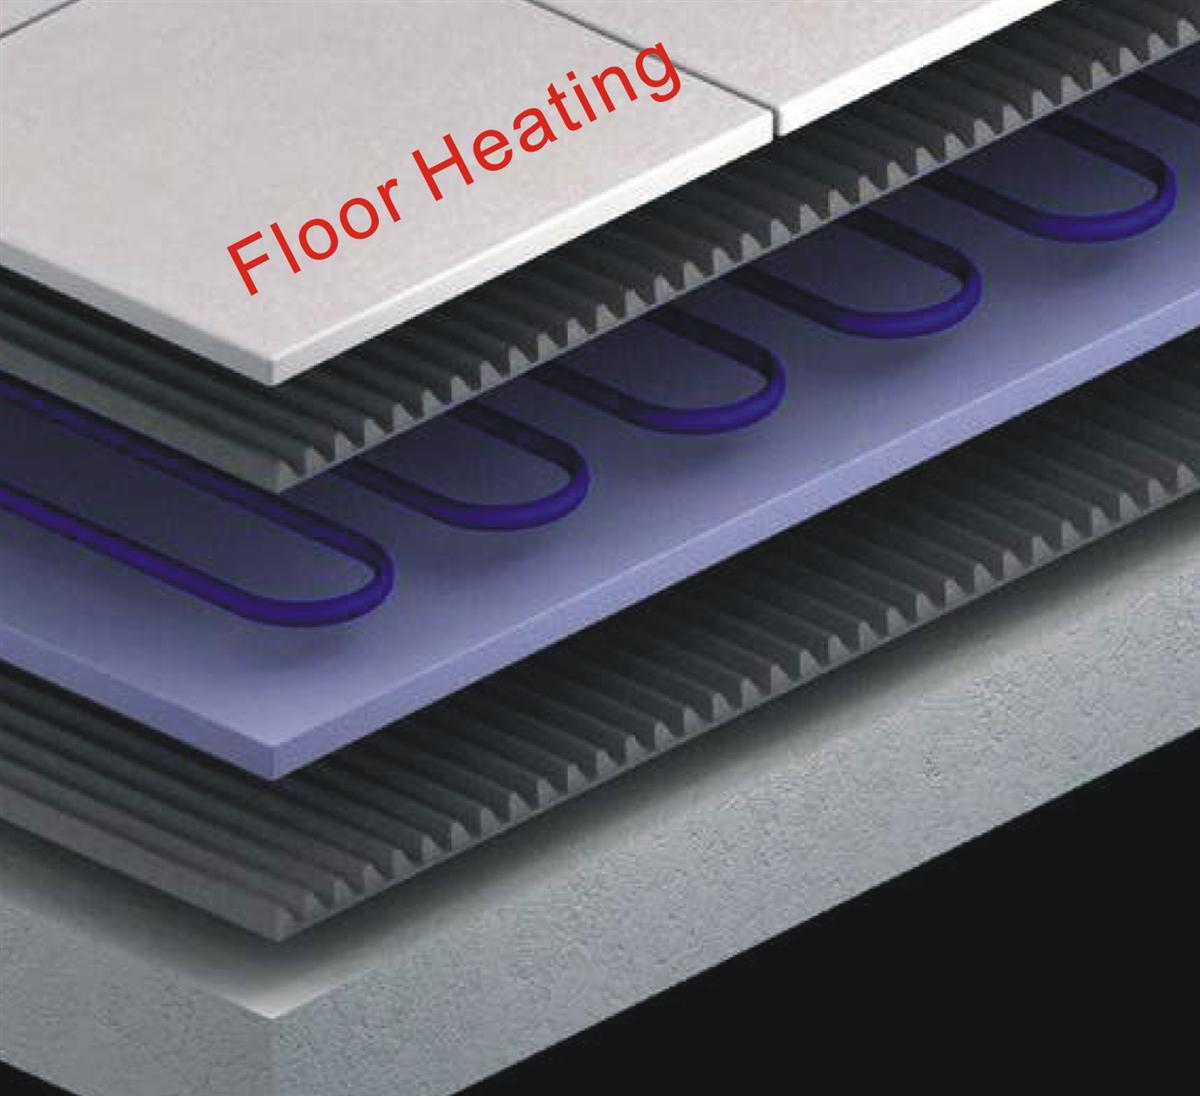 地暖工程 floor heating